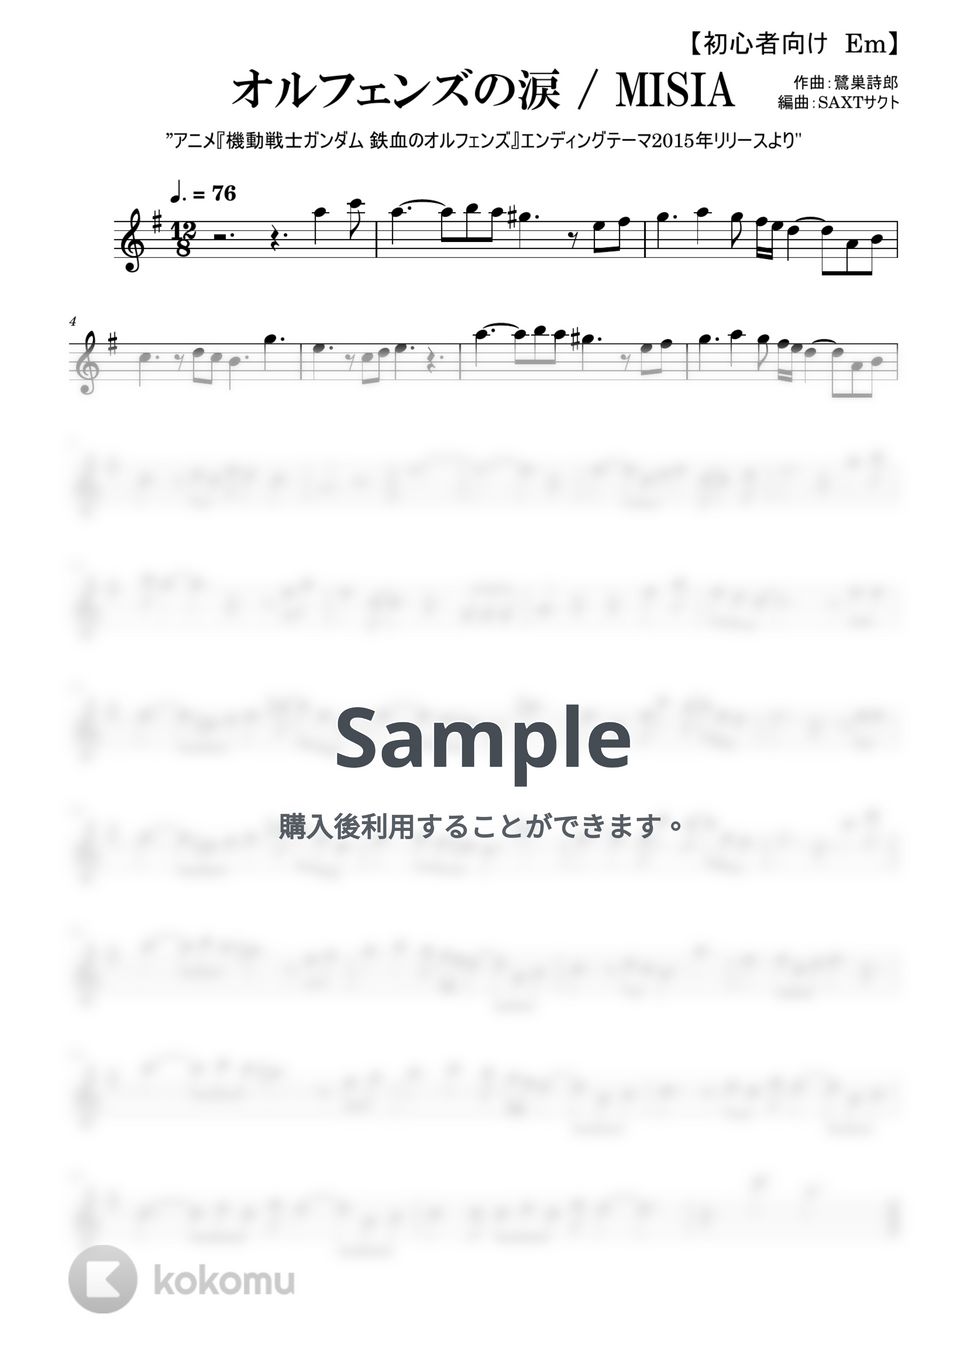 MISIA - オルフェンズの涙 (めちゃラク譜) by saxt